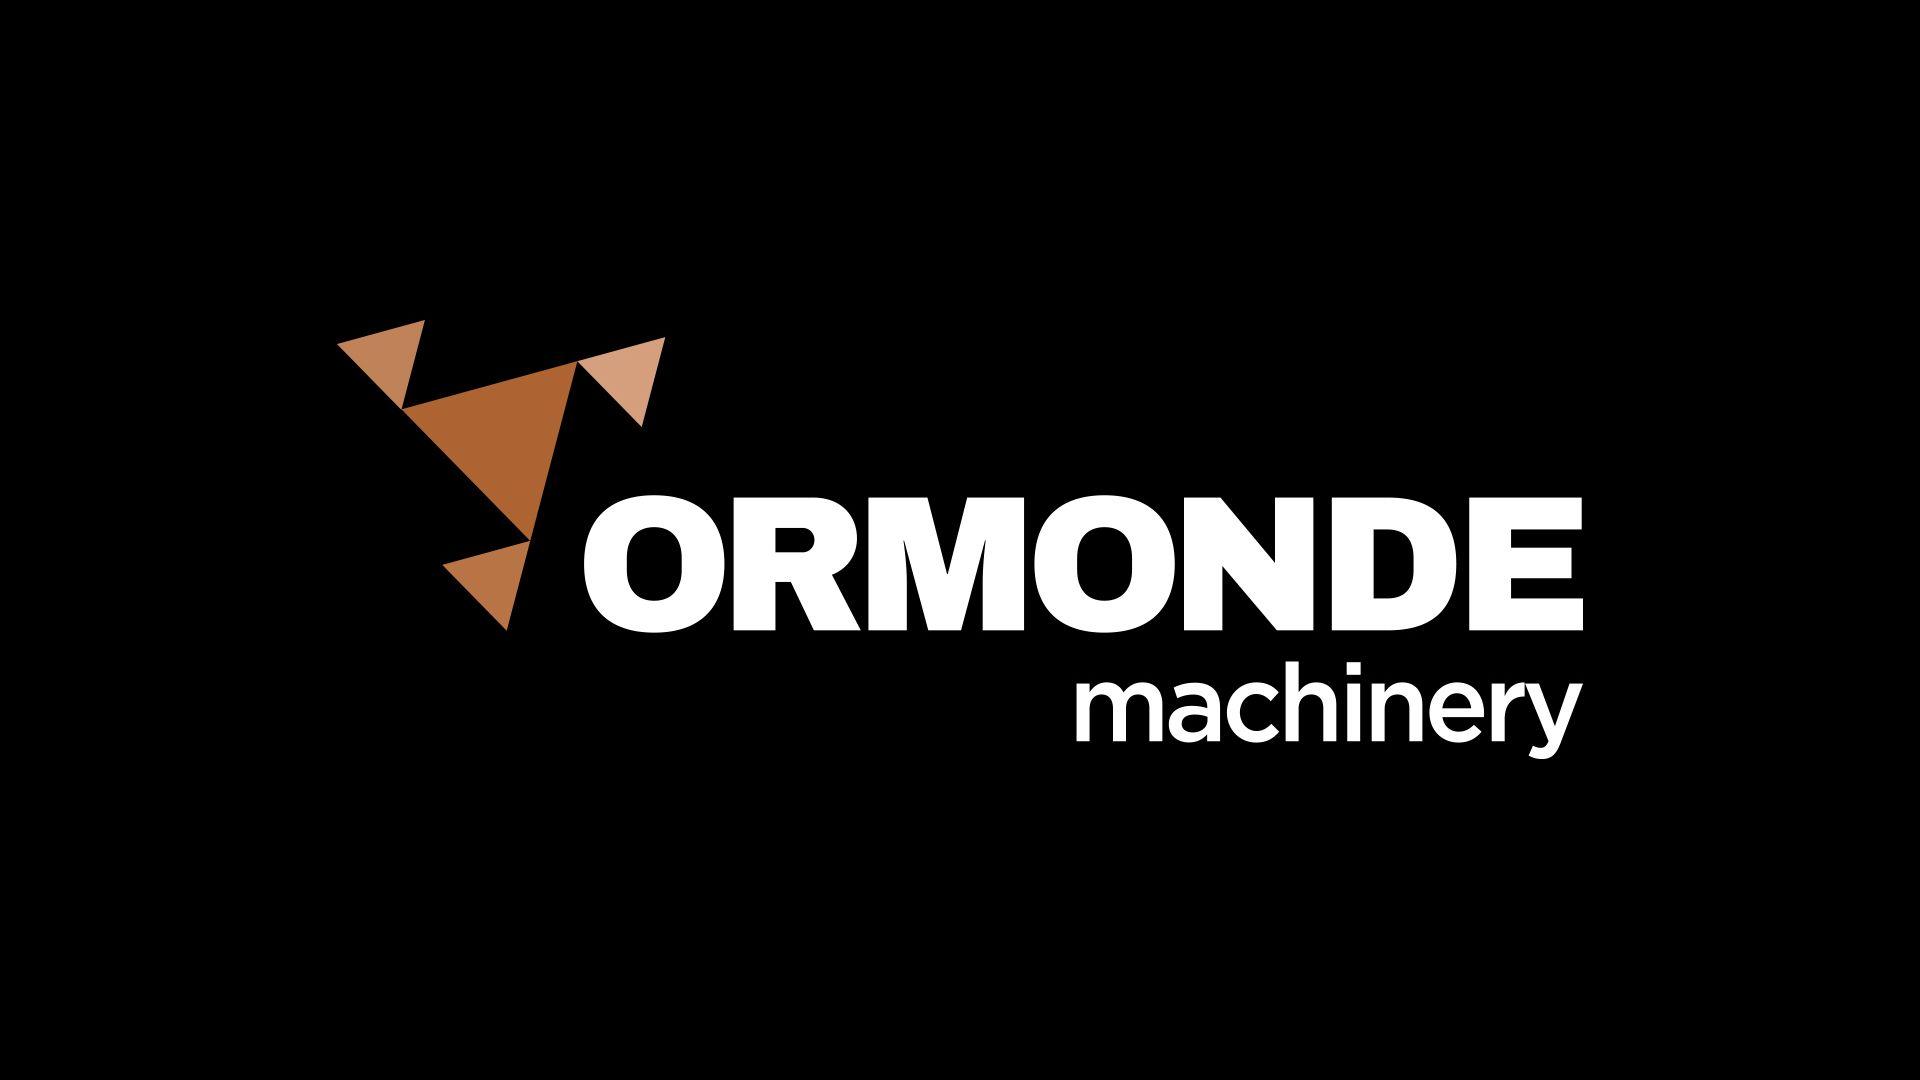 Machinery Logo - Ormonde Machinery Logo Design